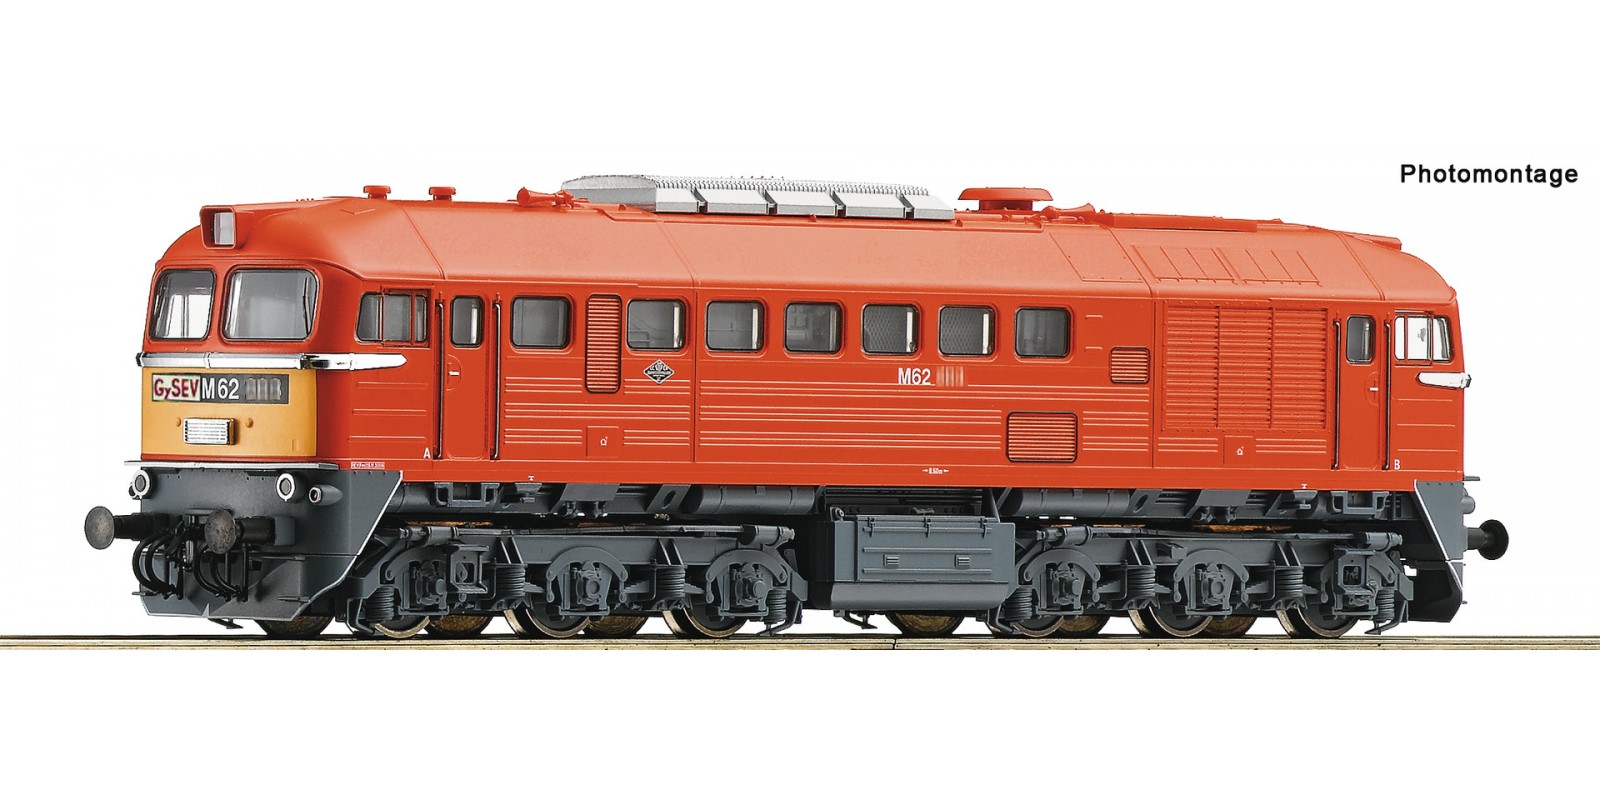 RO73244 - Diesel locomotive M62, GYSEV